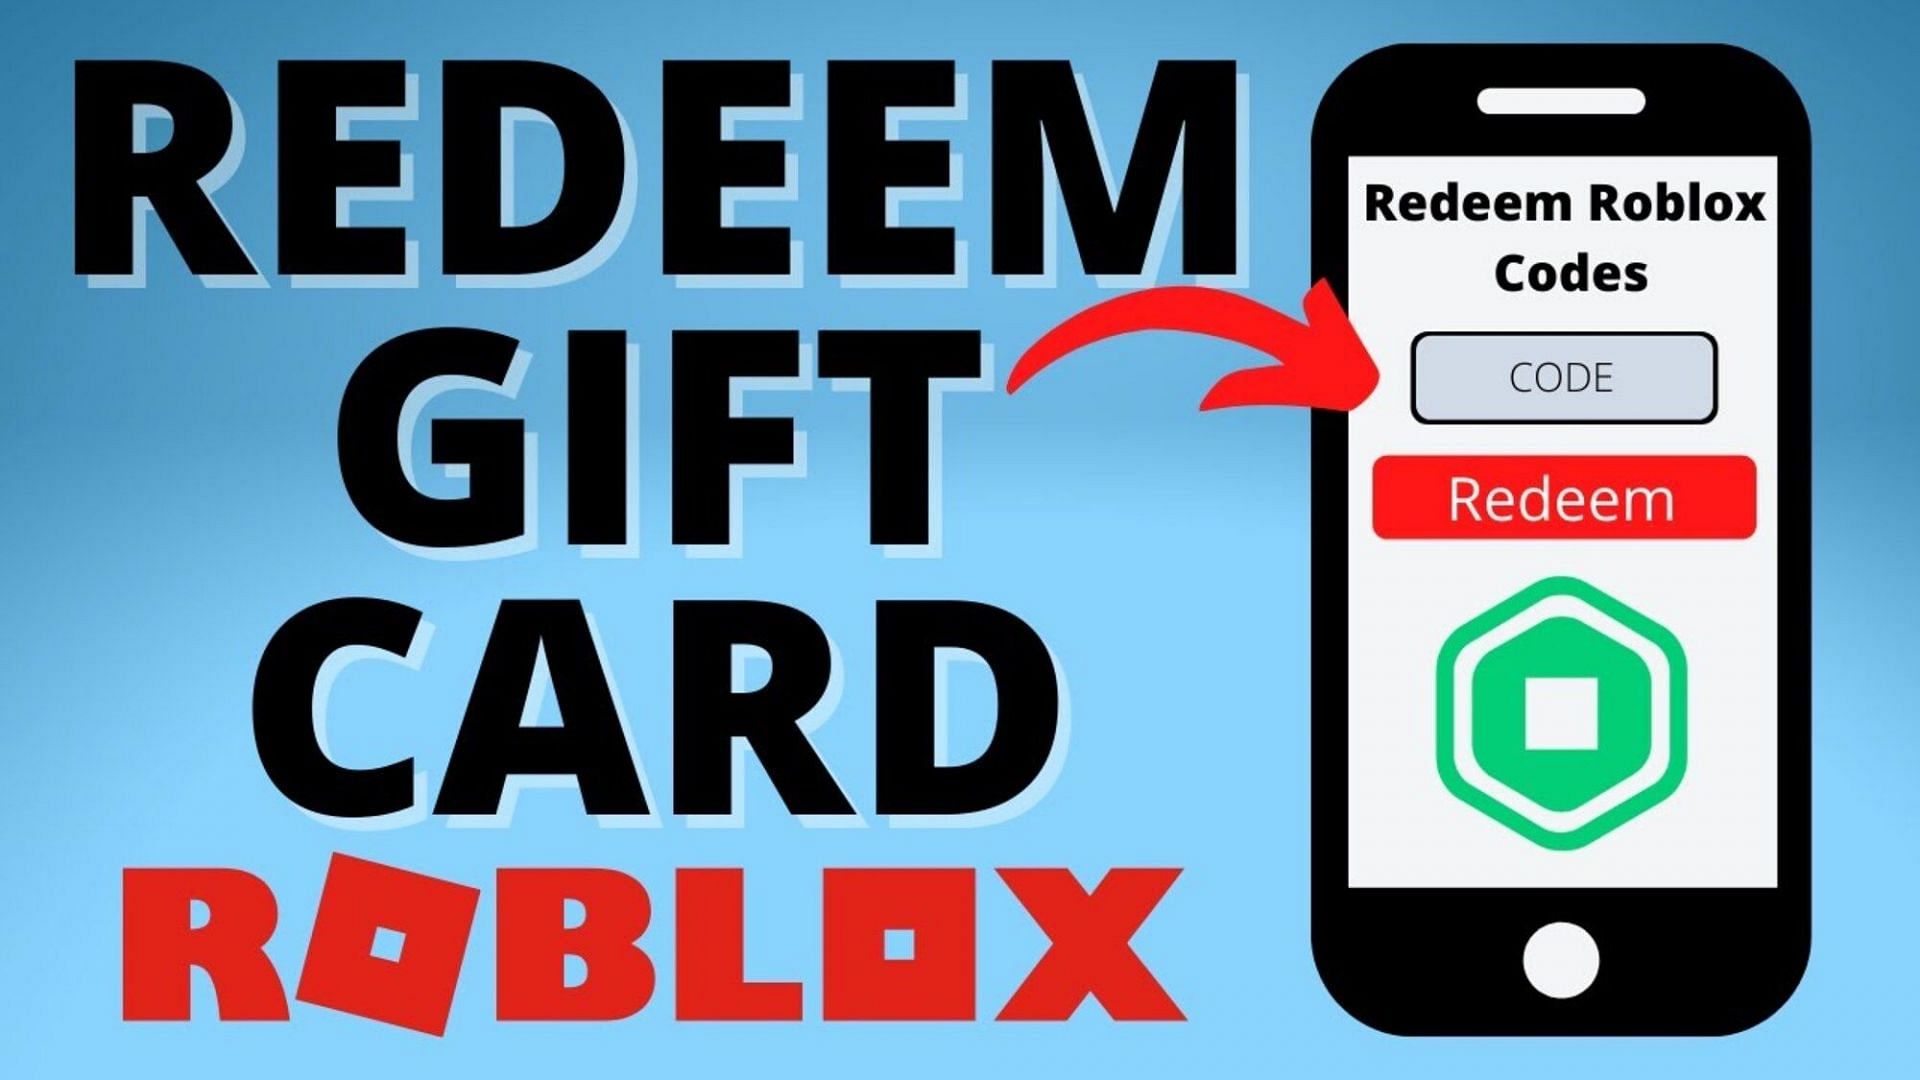 Redeeming Roblox Gift Cards via Phone (Image via Roblox)